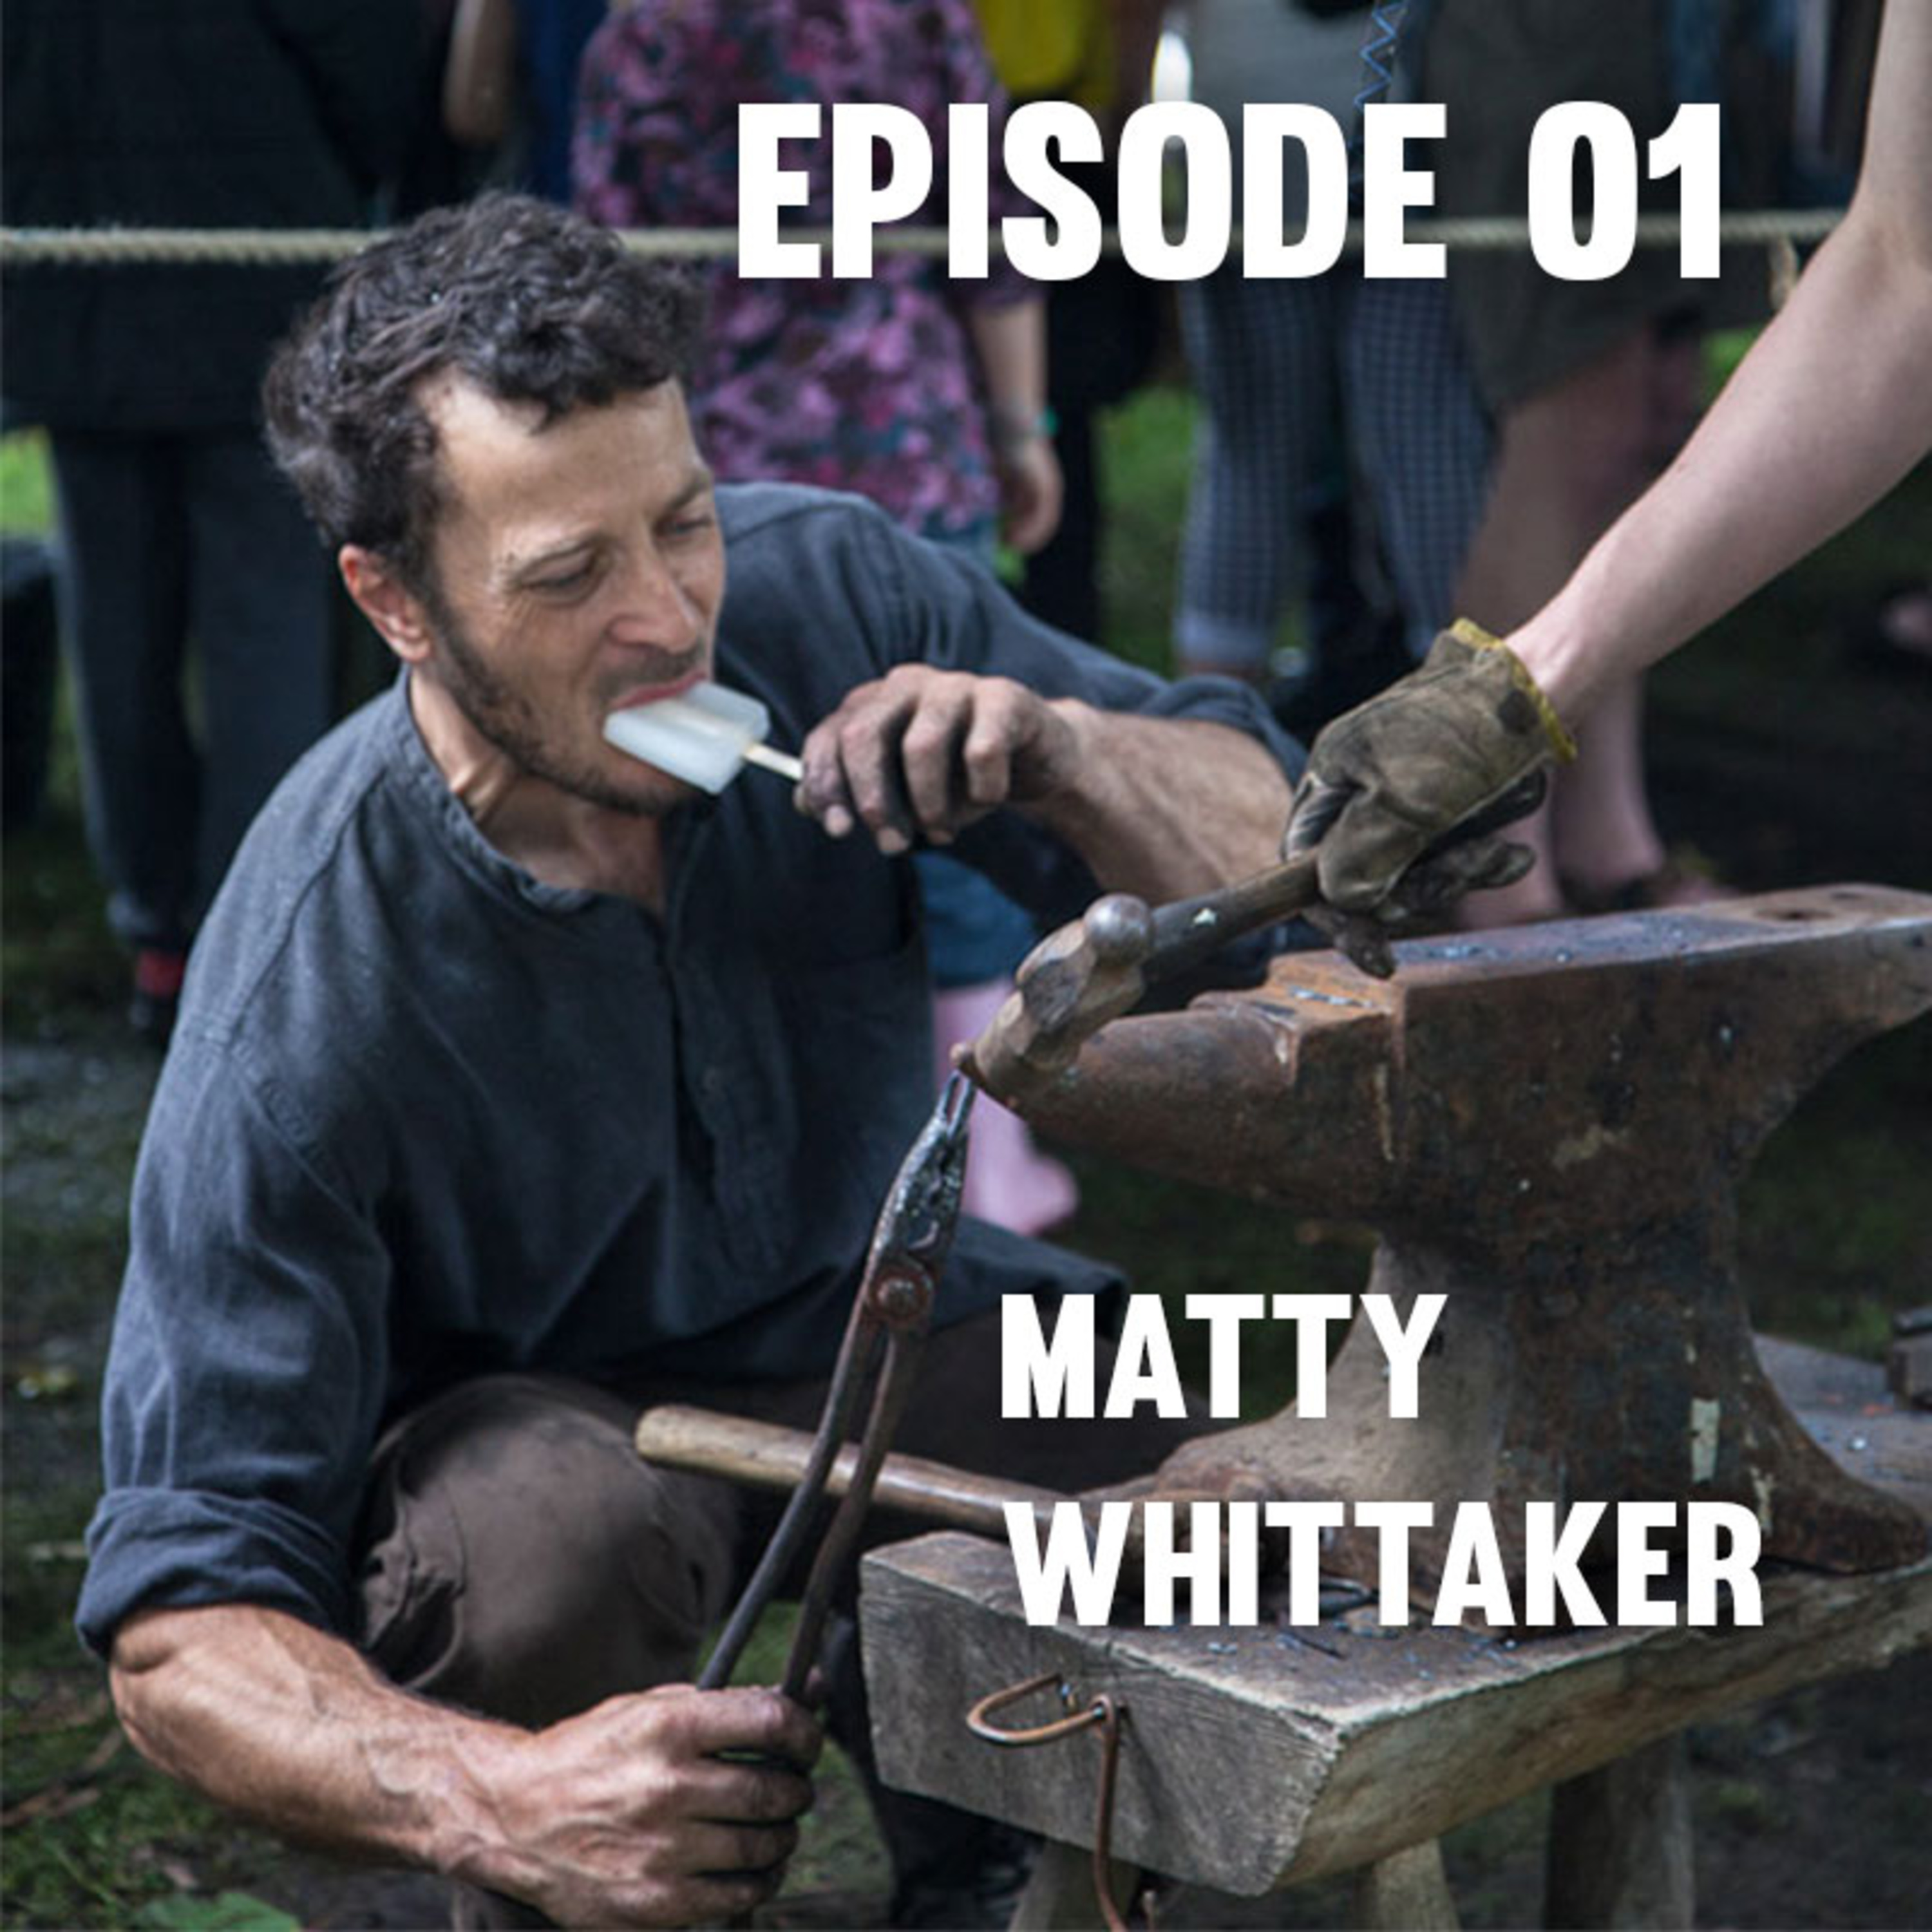 Episode 01 - Matty Whittaker